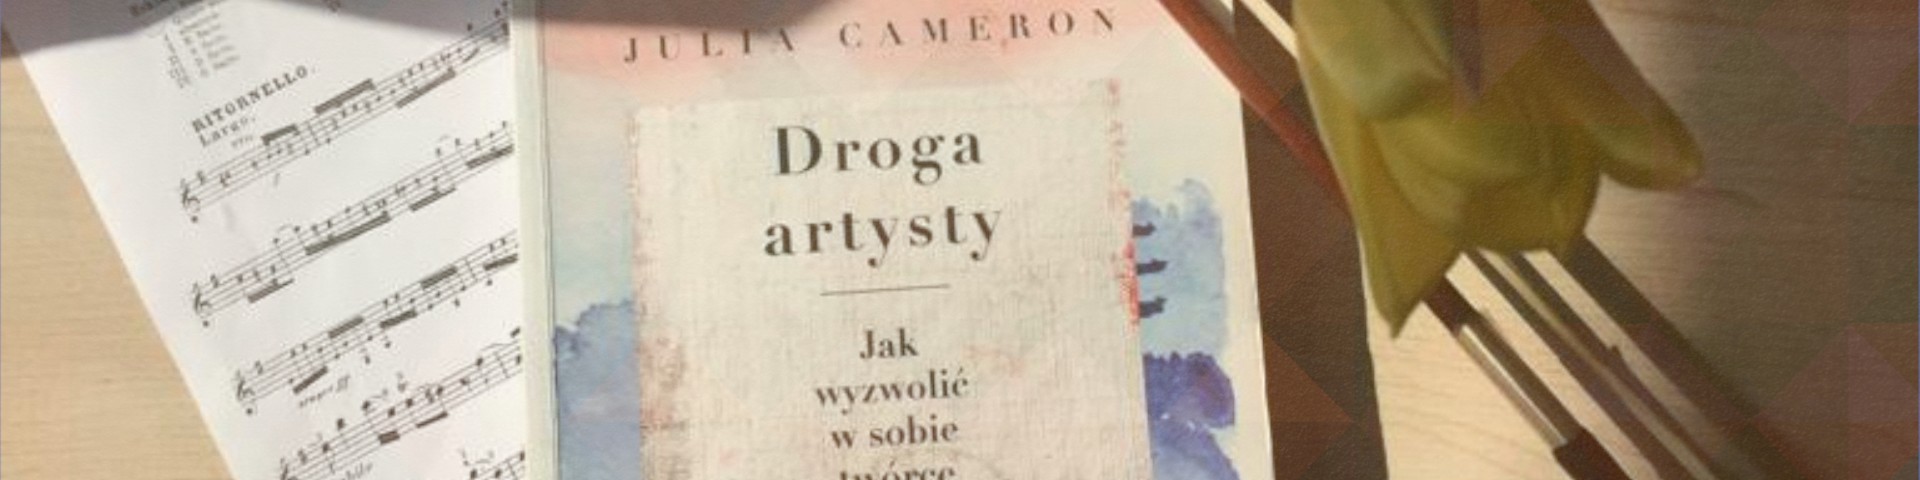 Julia Cameron – "Droga artysty" – RECENZJA